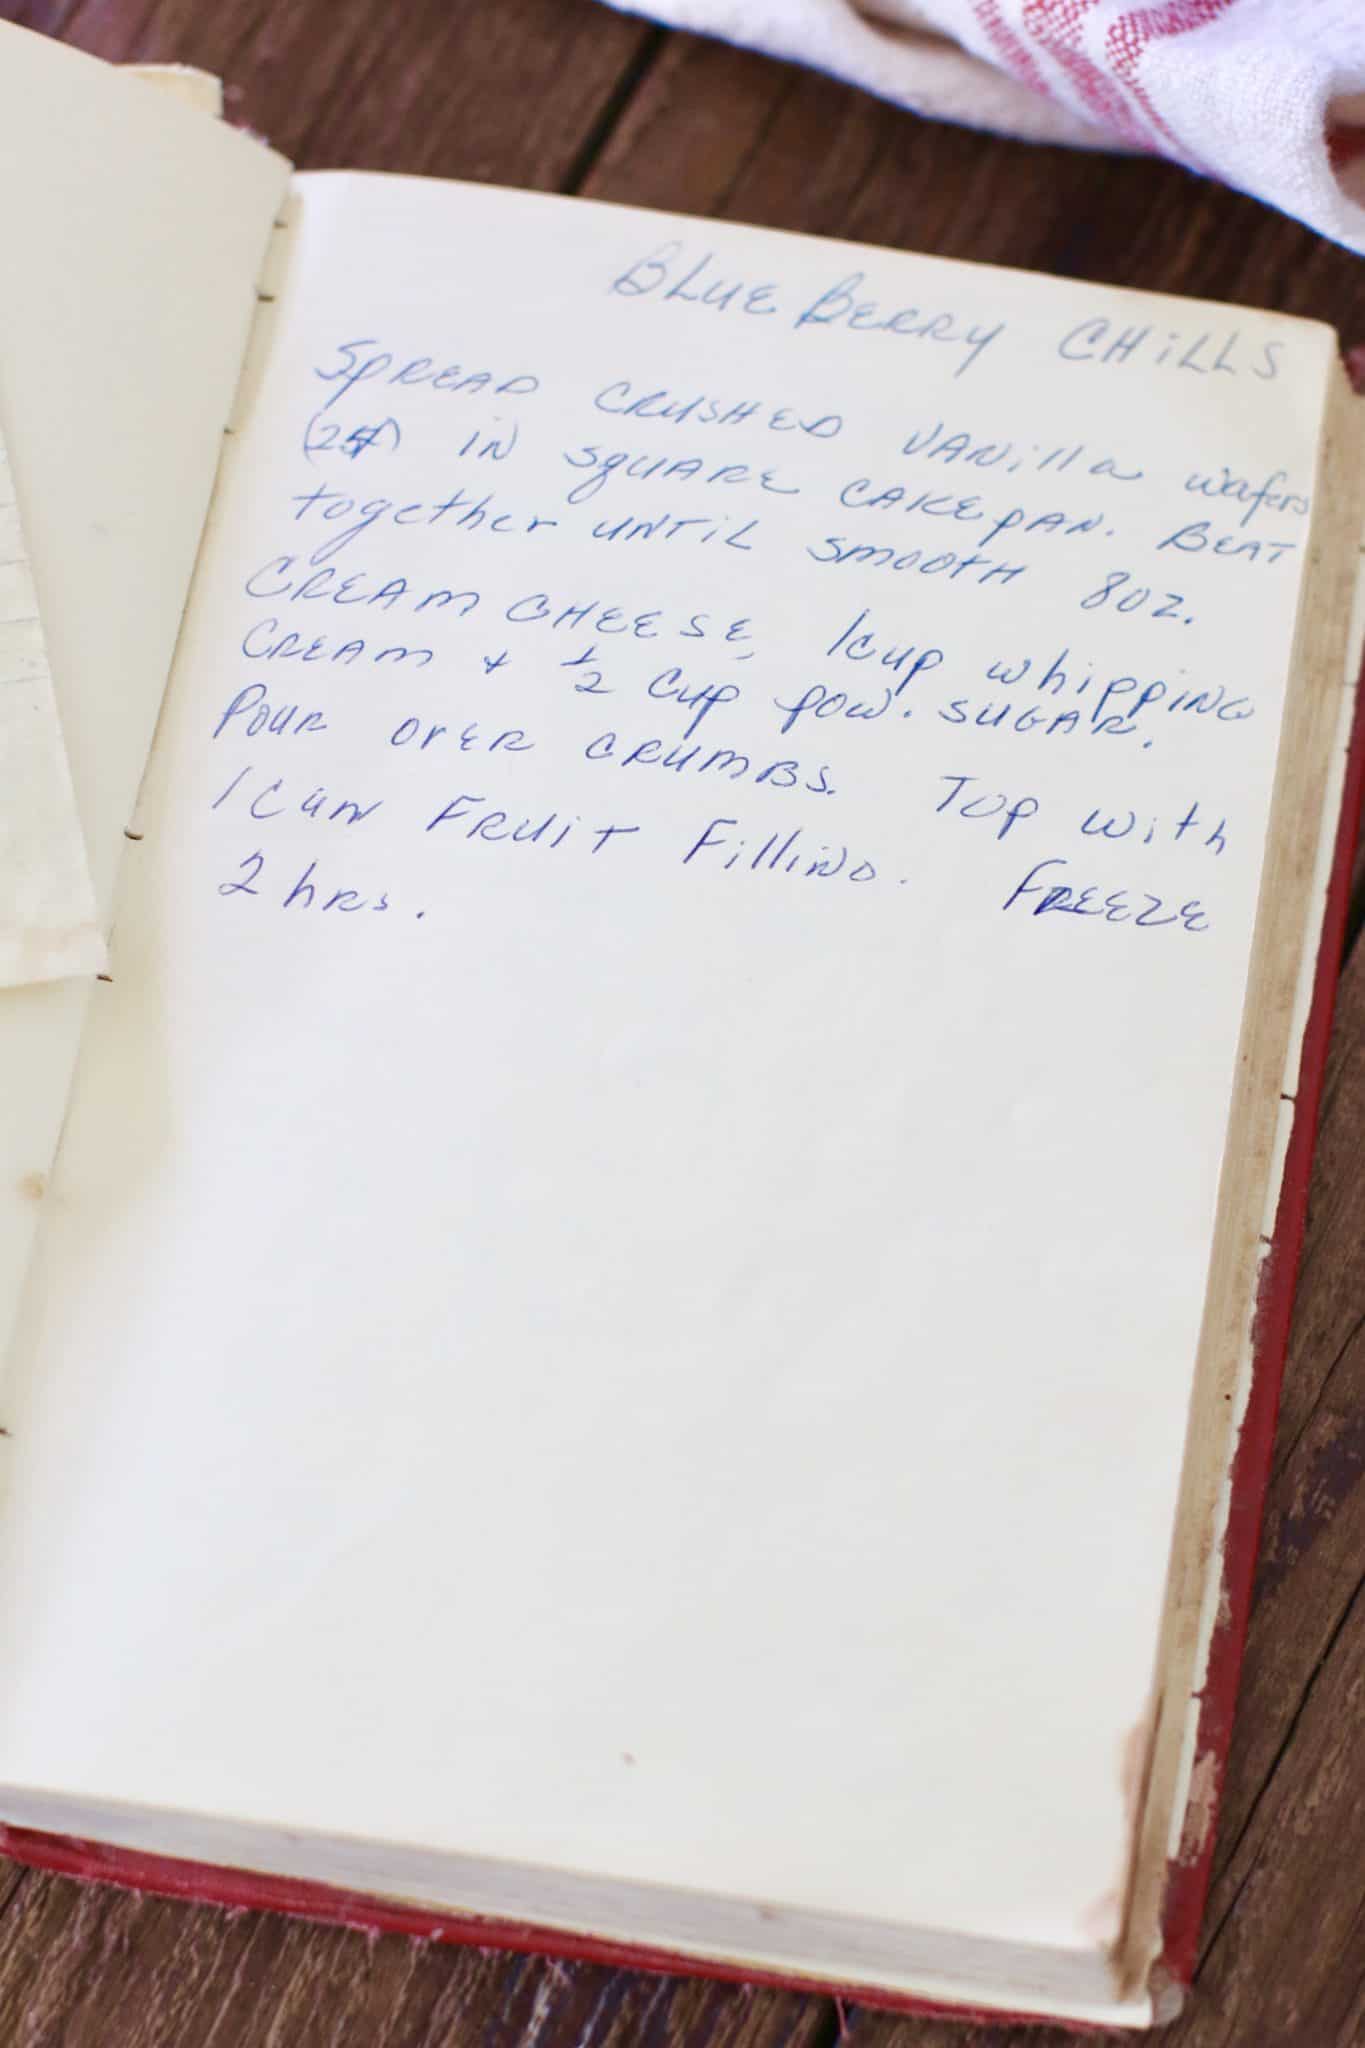 Grandma's Cookbook showing her handwritten recipe for blueberry chills.